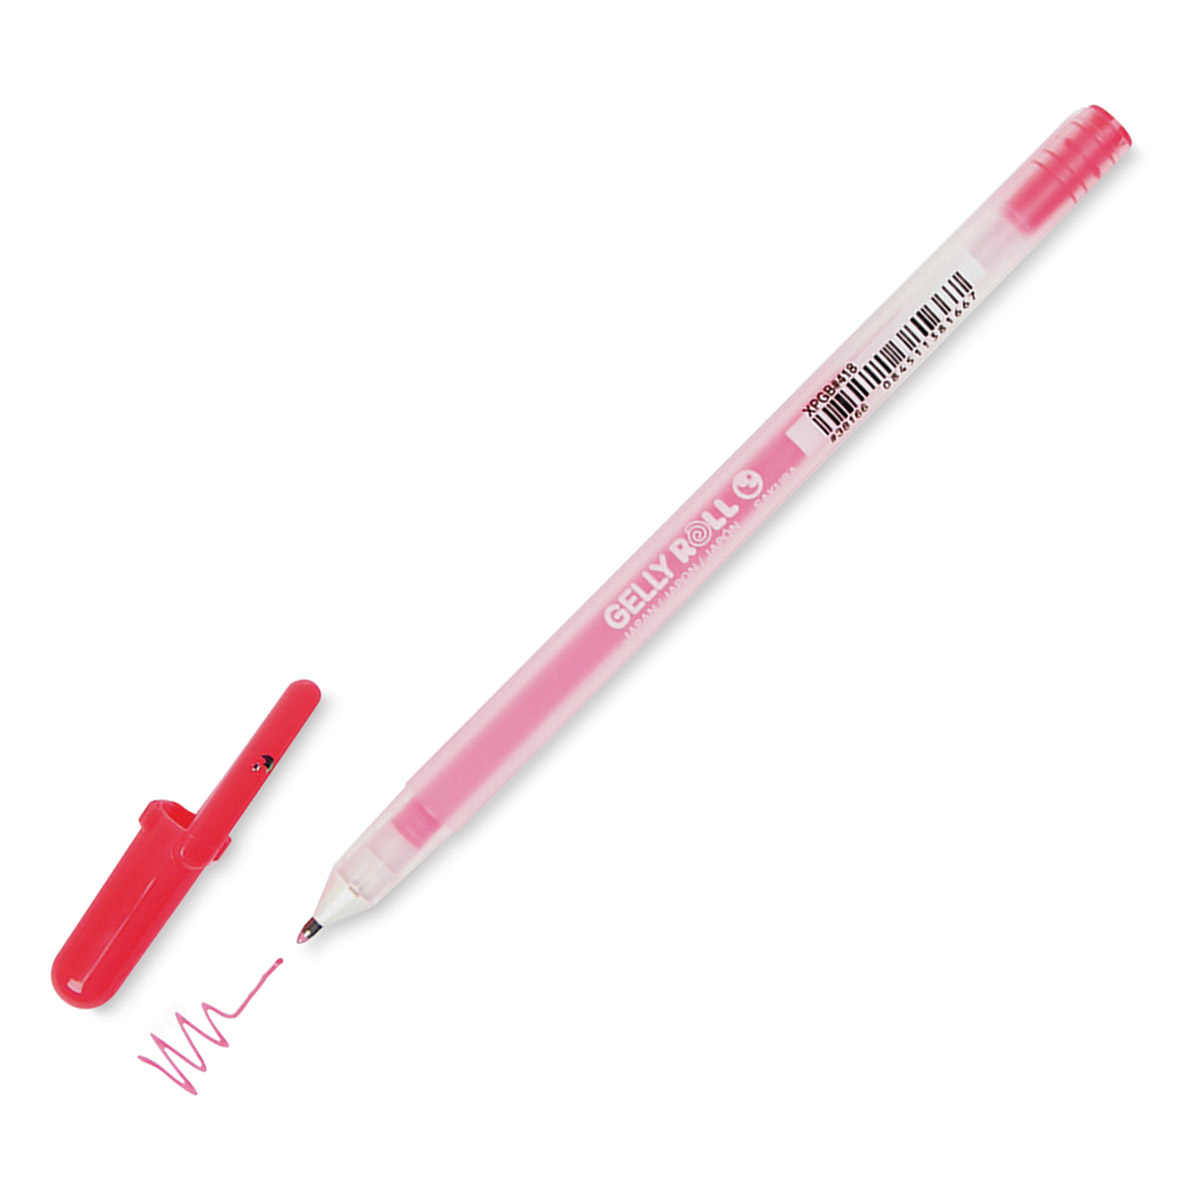 Sakura Gelly Roll Moonlight Pen Set, Fine Line, 10 Colors – ARCH